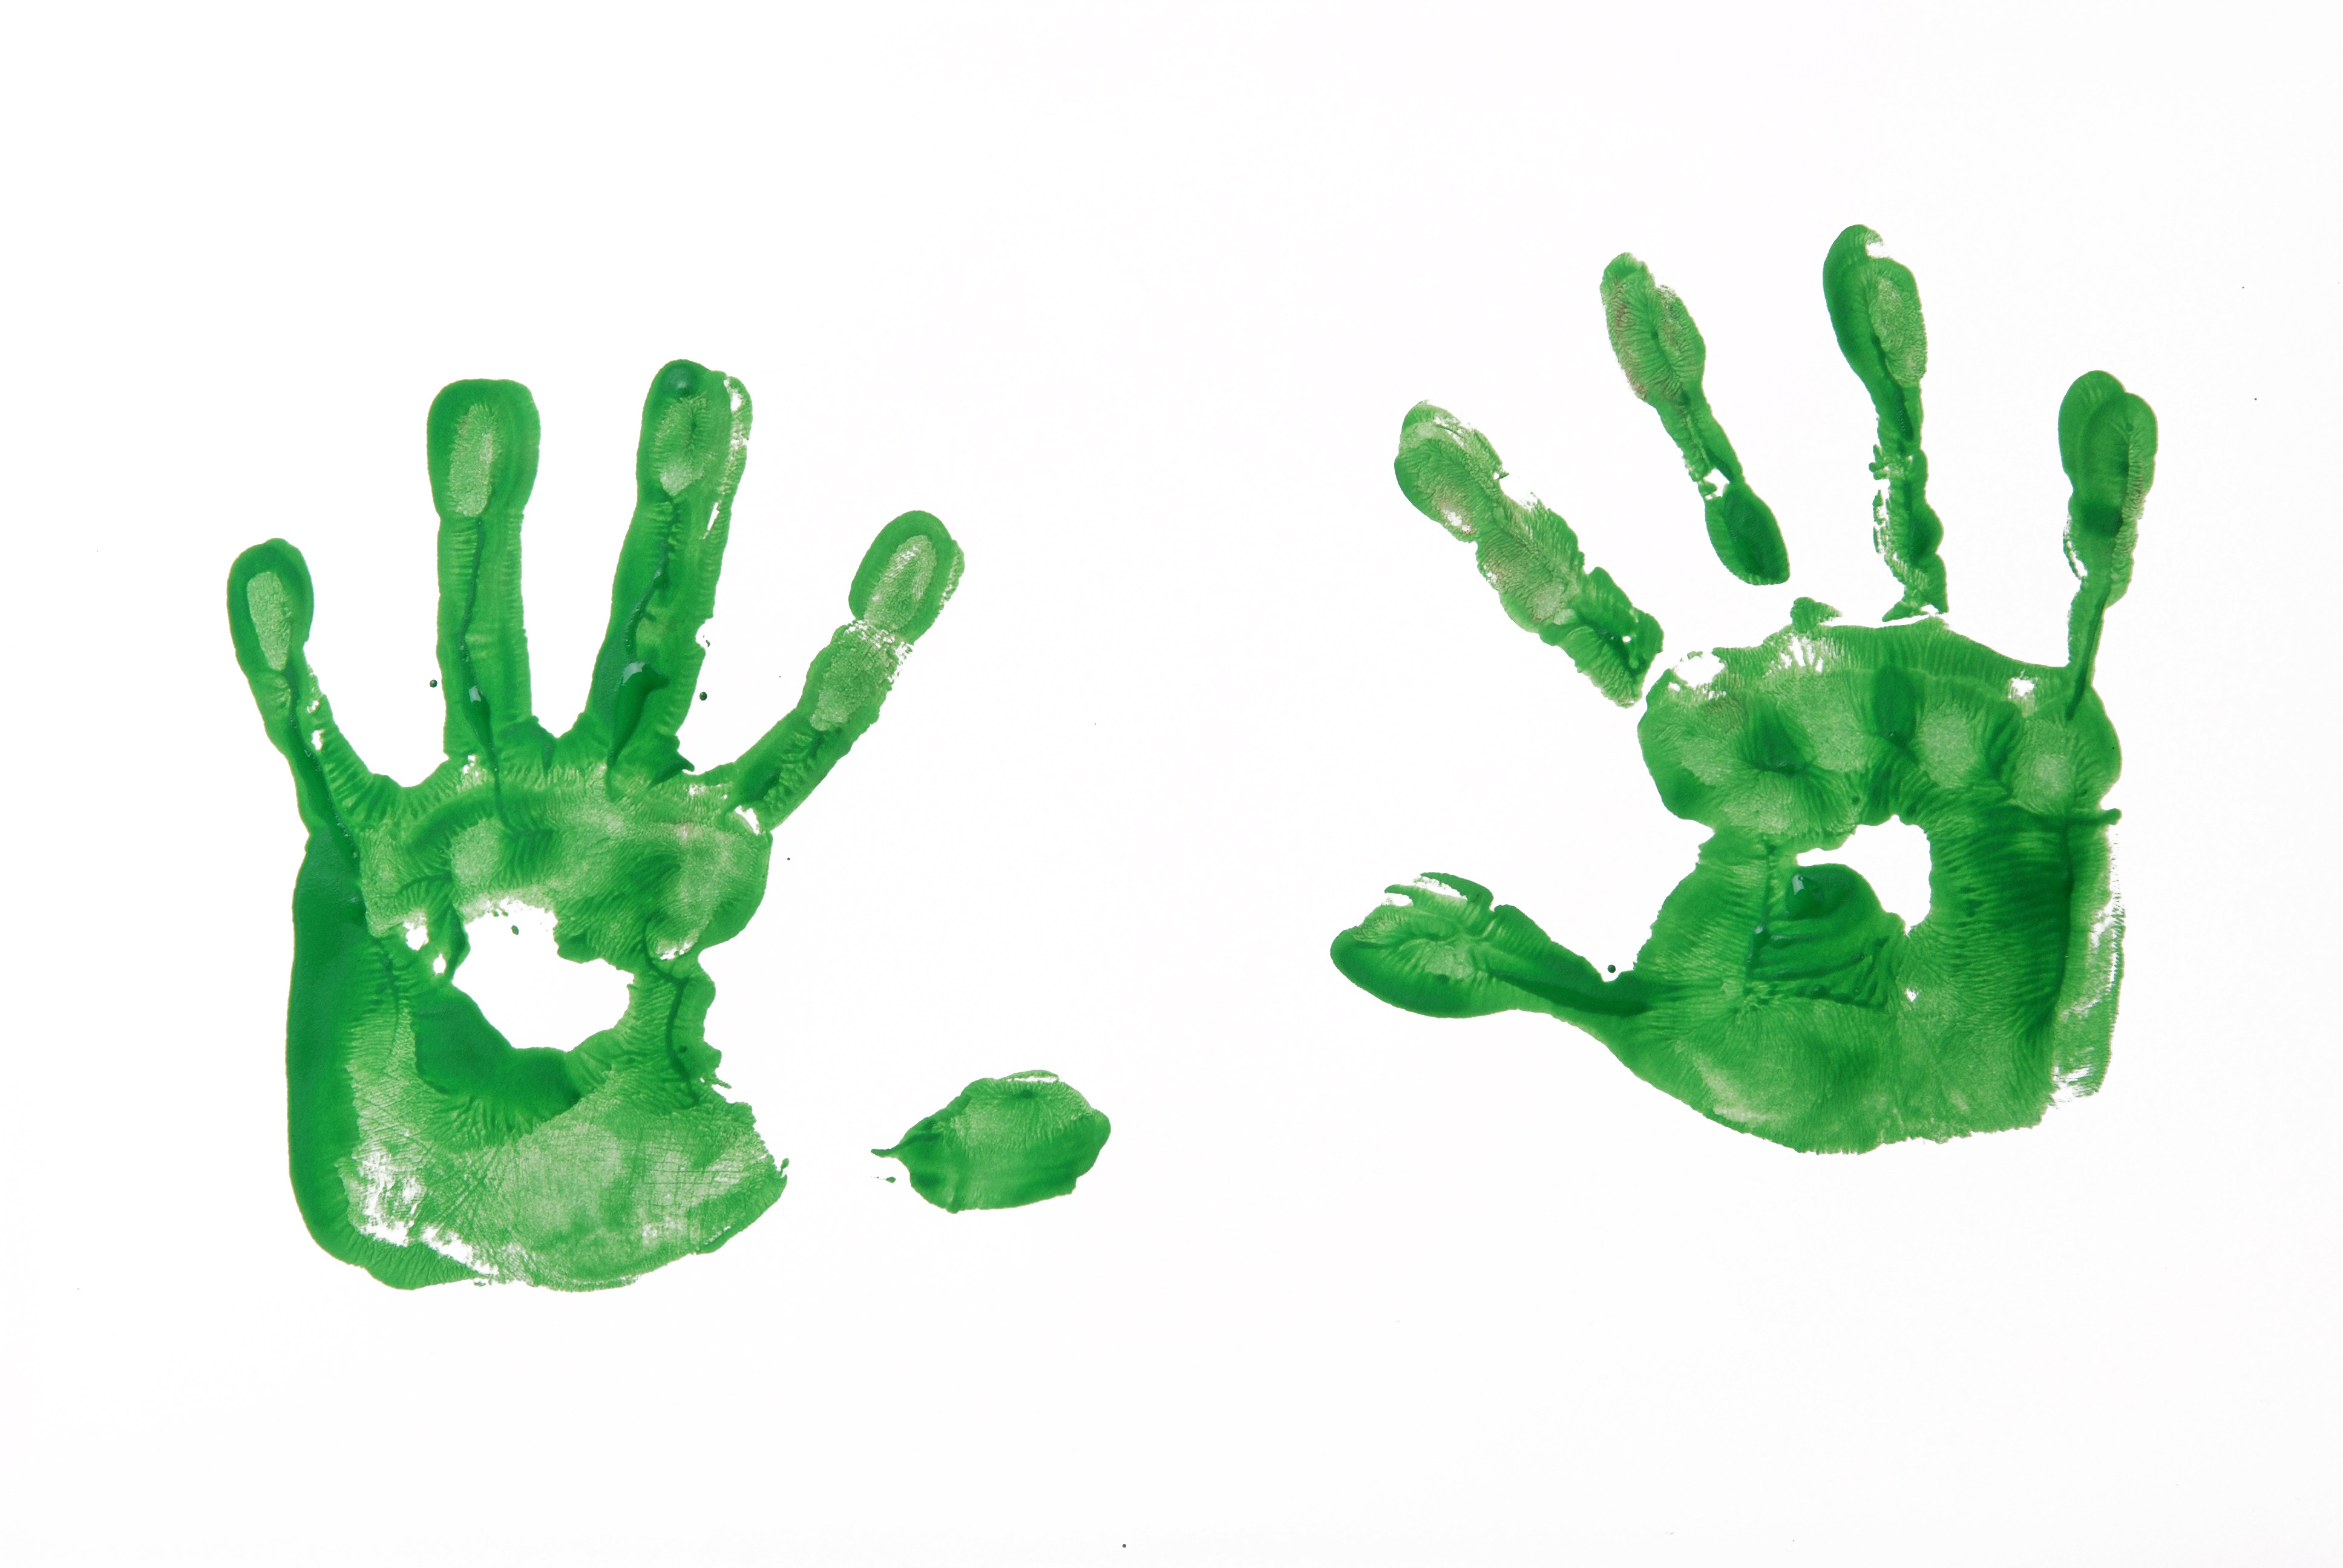 Green clipart handprint - Pencil and in color green clipart handprint